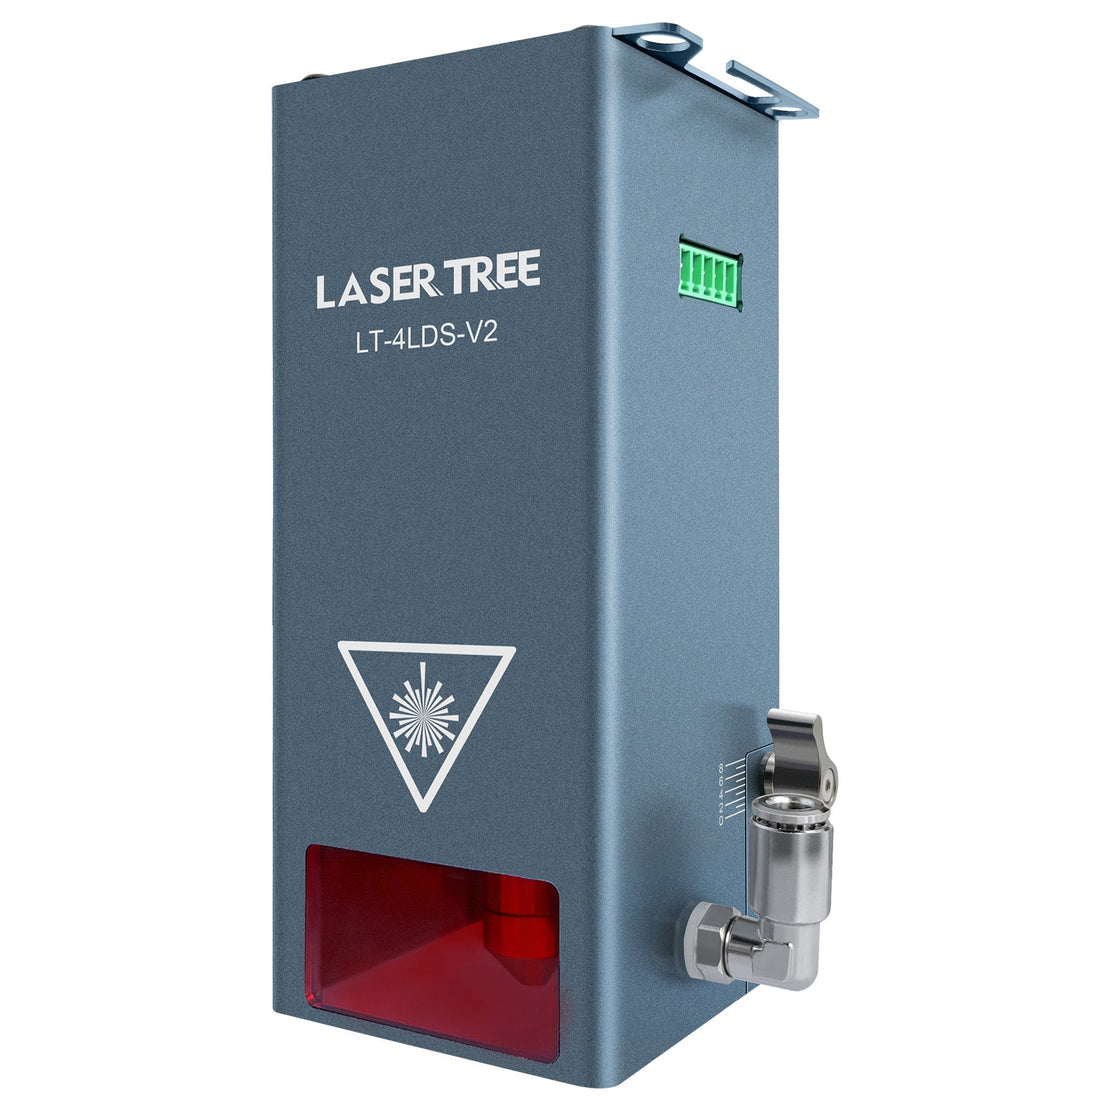 LASER TREE 20W Optical Power Laser Cutting Module - Laser Tree